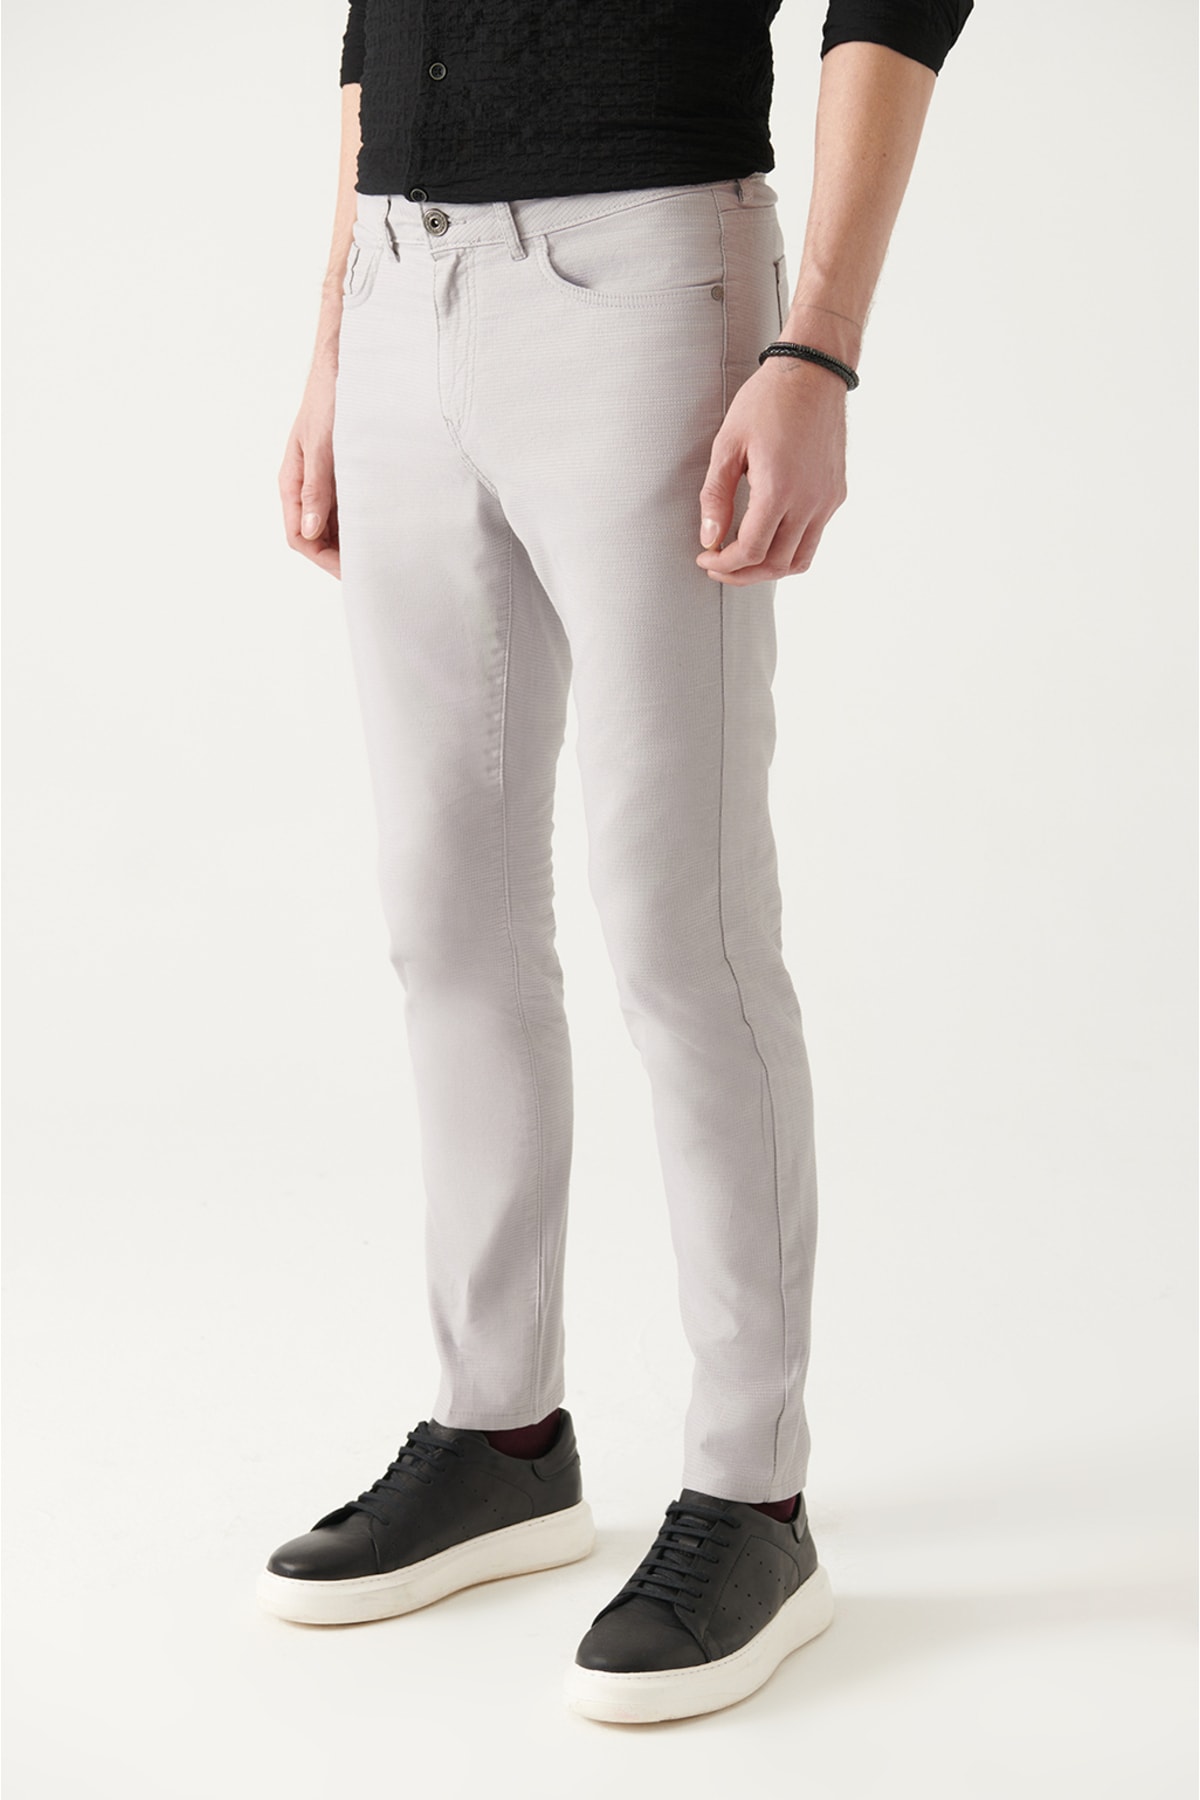 Avva Erkek Açık Gri 5 Cepli Pamuklu Likralı Slim Fit Pantolon B003001 AN9154